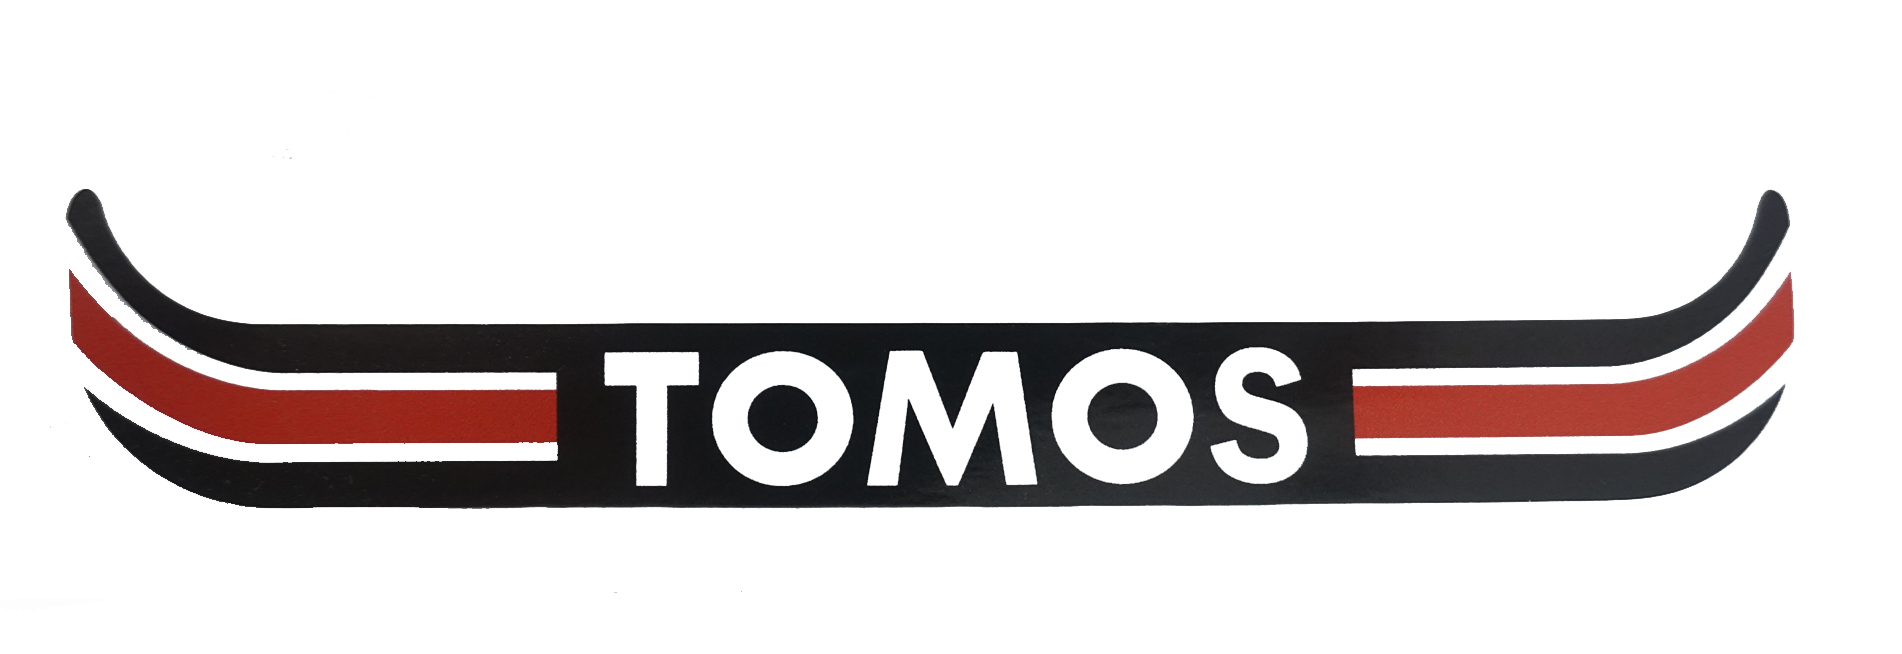 TOMOS Sticker kentekenplaat breed Tomos rood - zwart